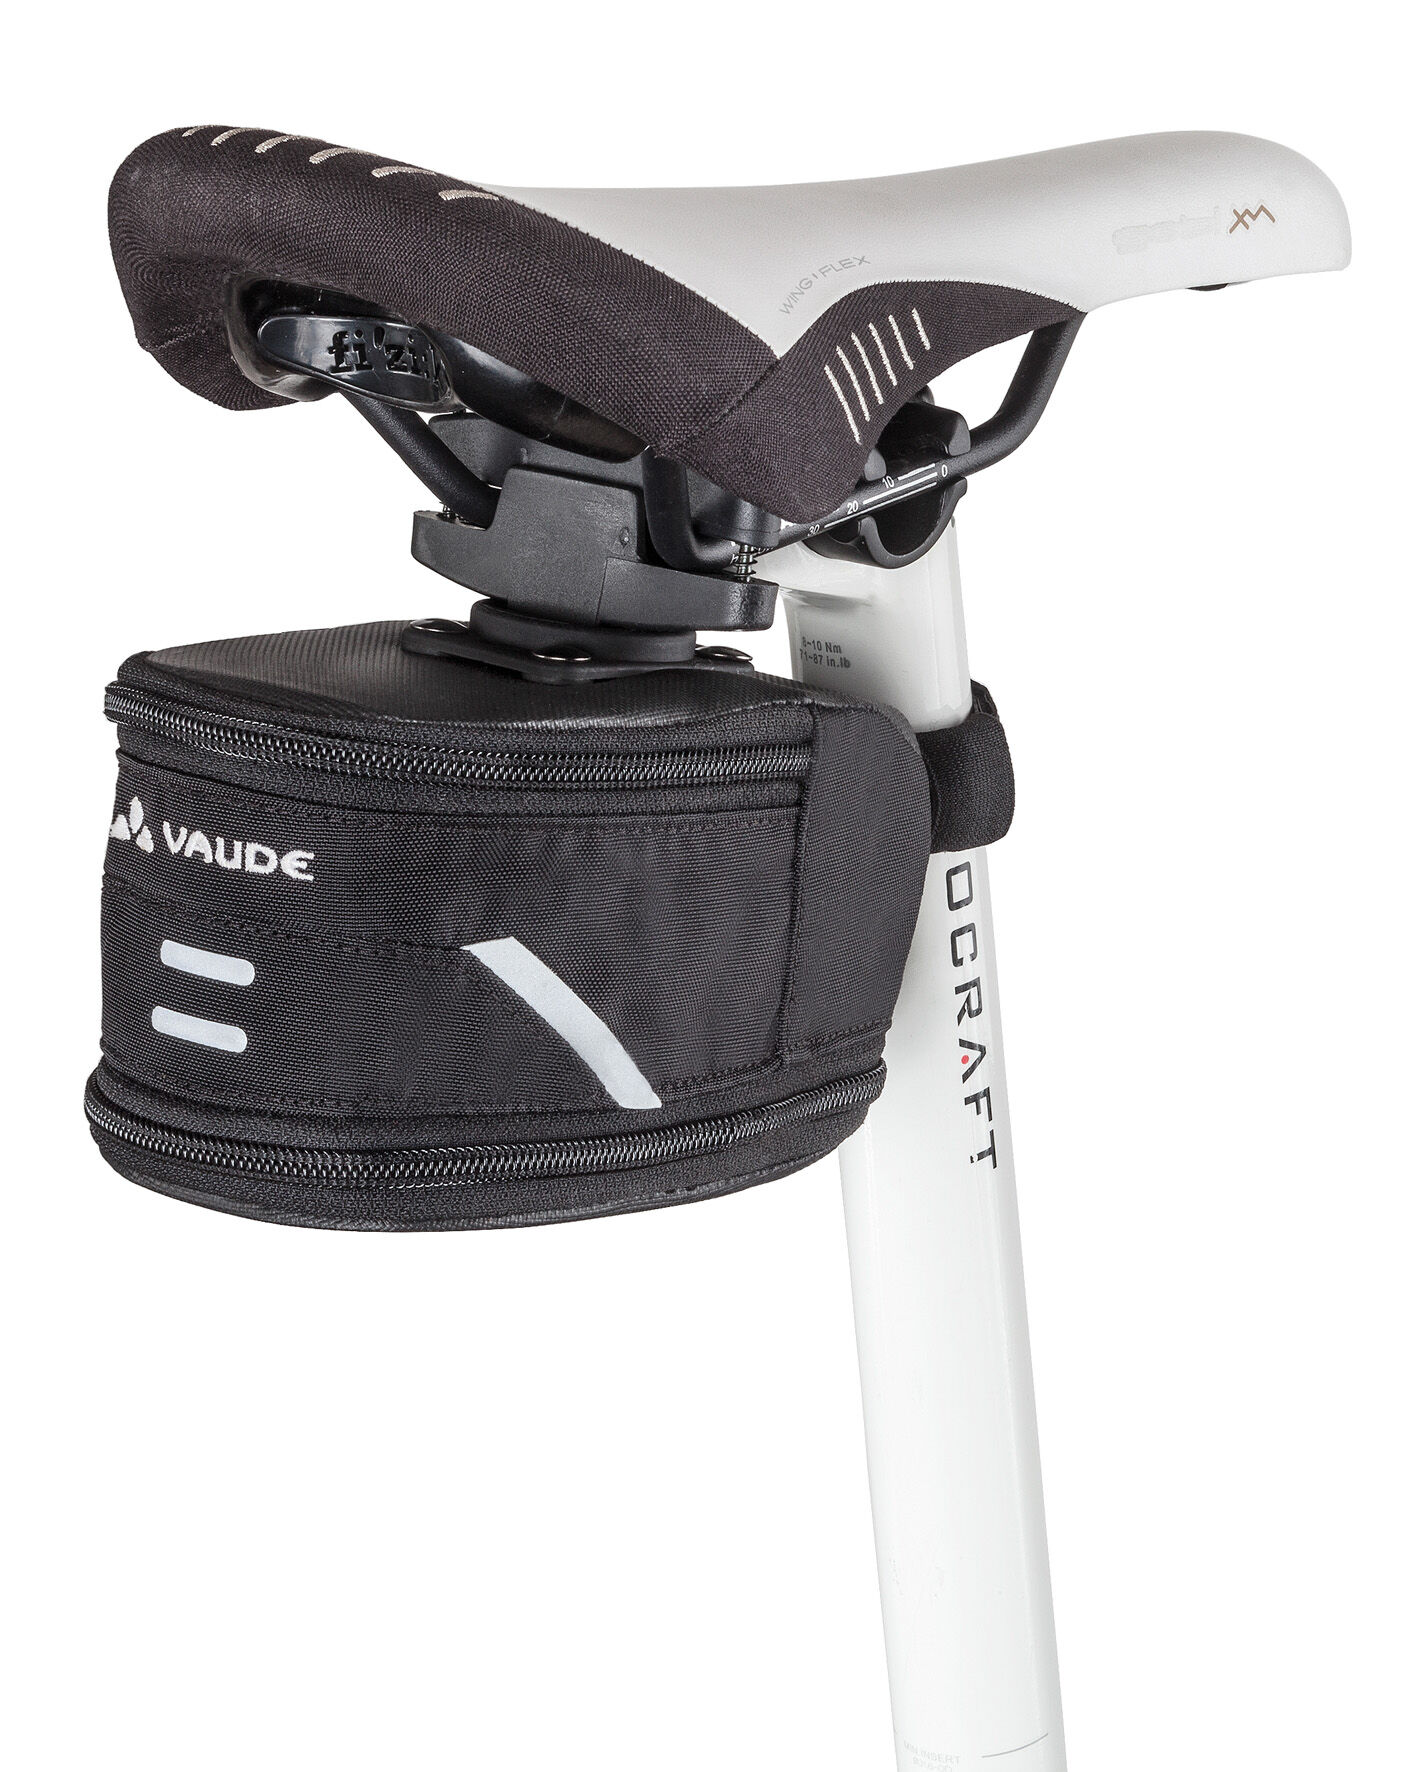 Vaude - Tool M - Bike bag